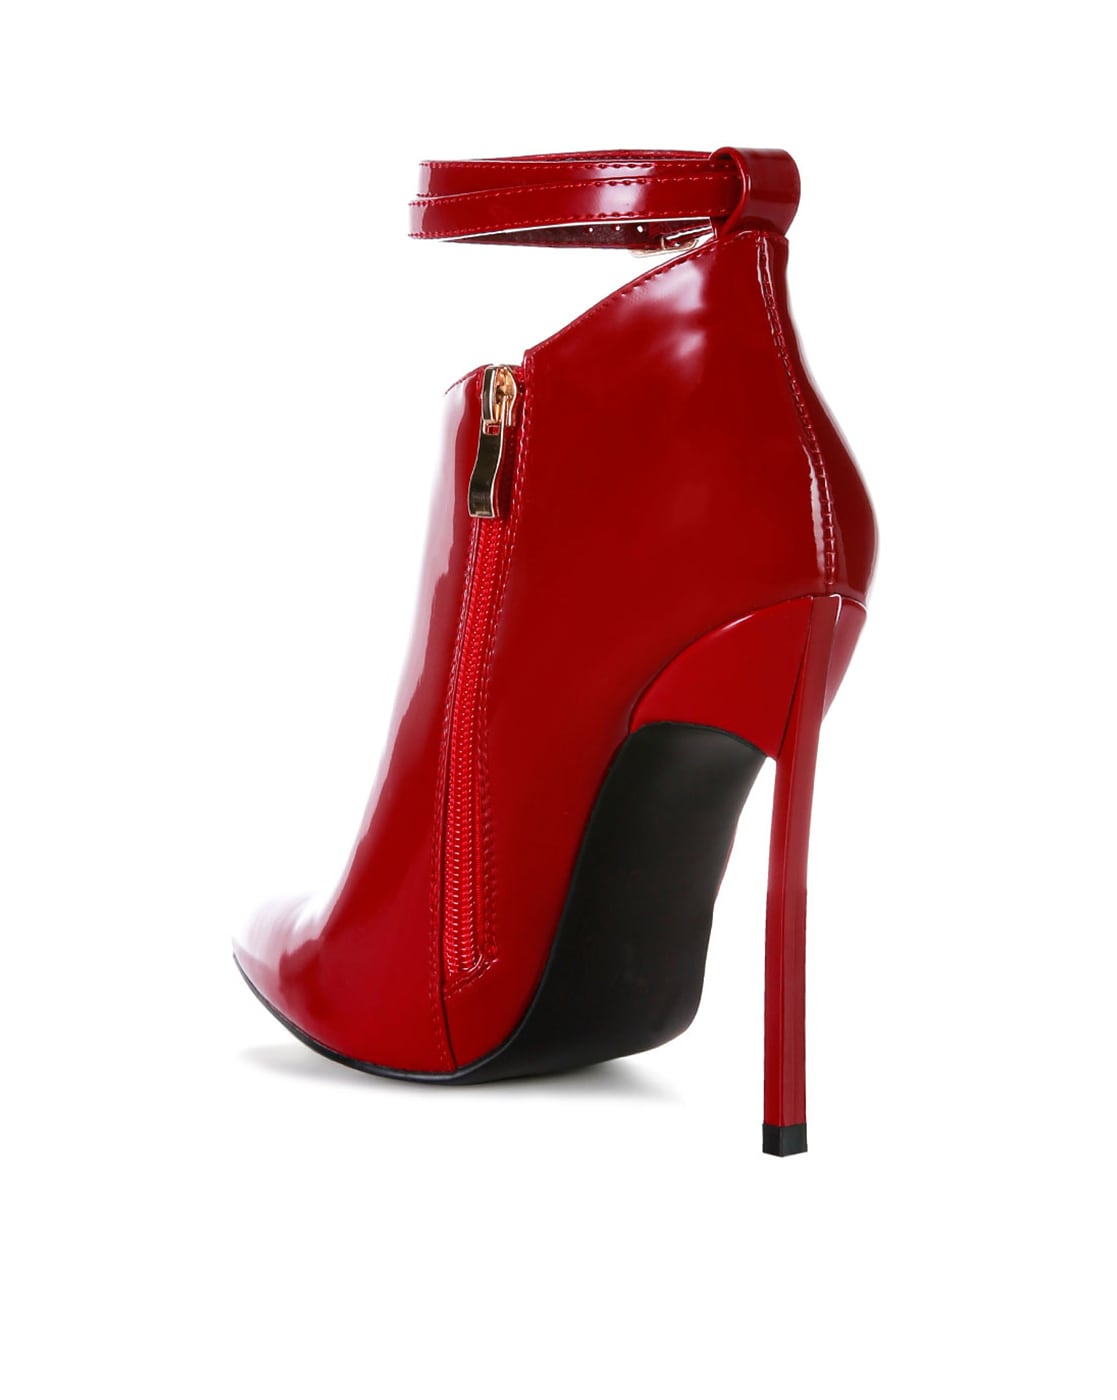 Harson Red Leopard Heel Patent Leather Ankle Boots by Django & Juliette |  Shop Online at Mountfords